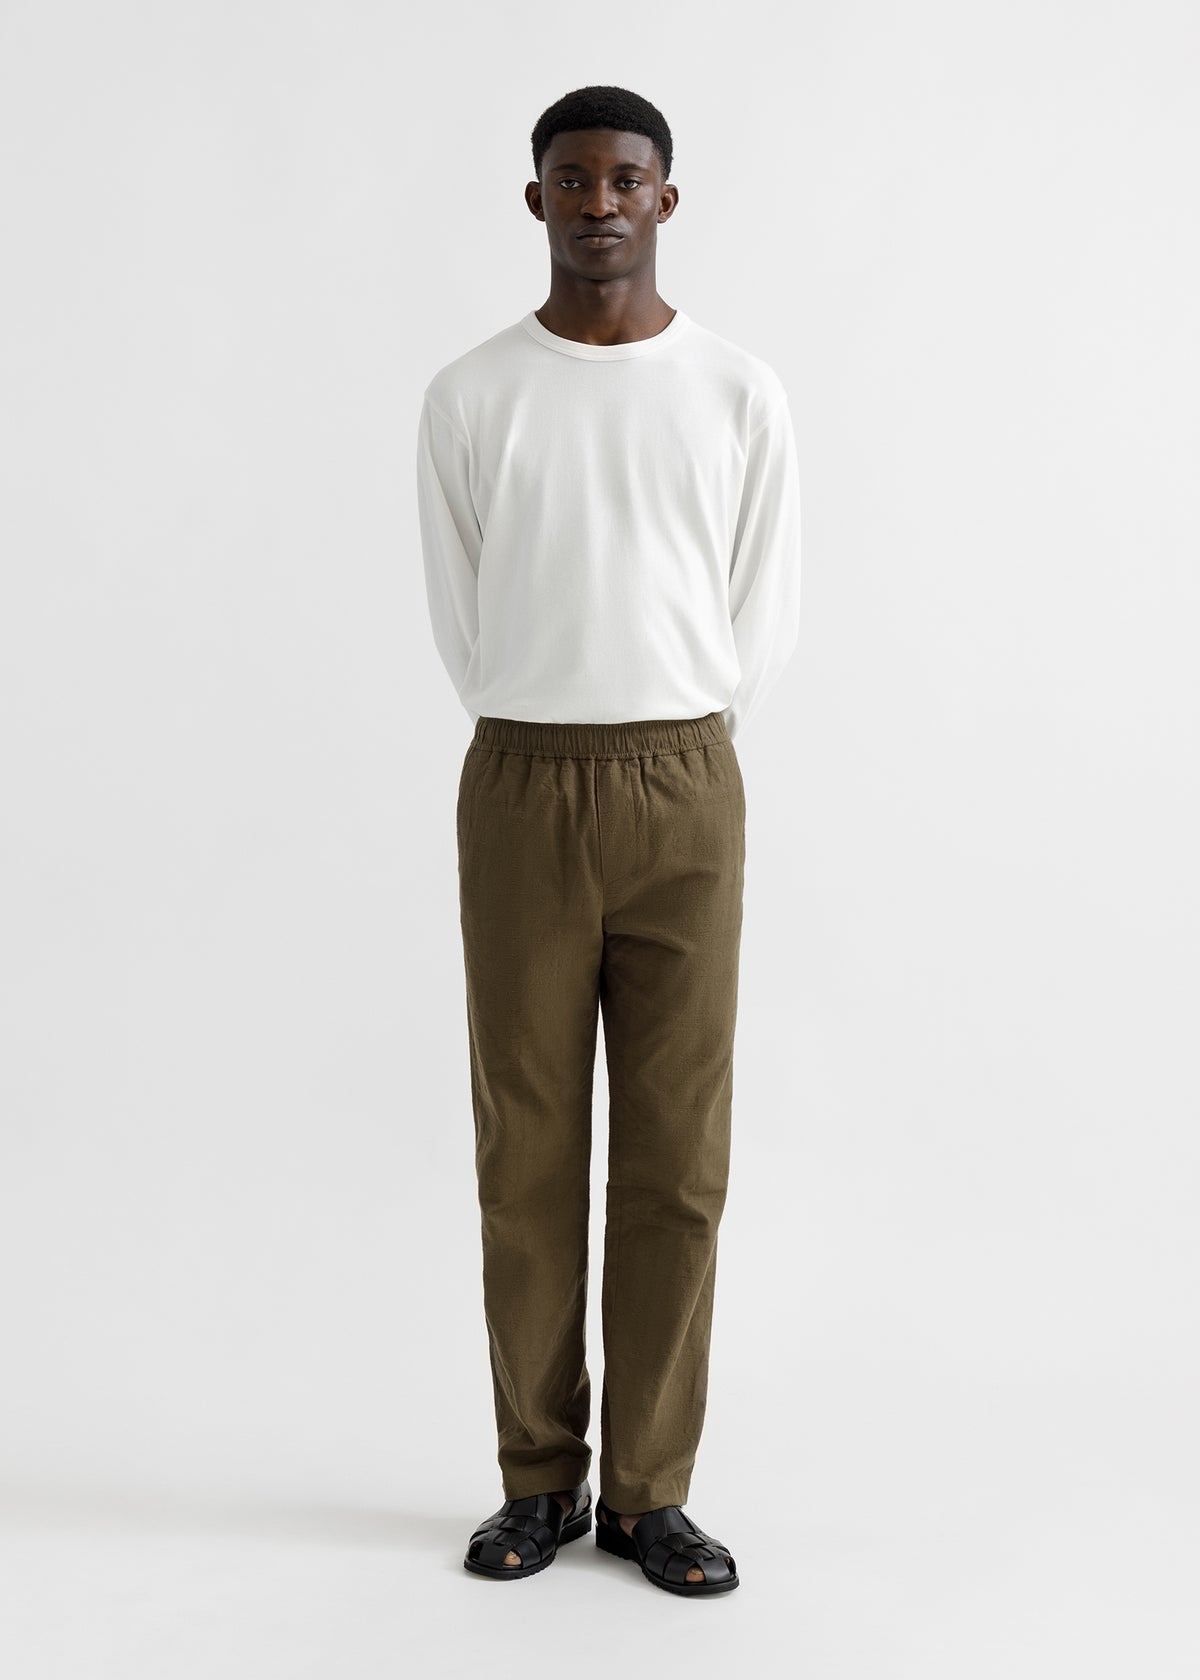 Comfortable Cut Black Mens Trousers | Wholesale Boho Clothing